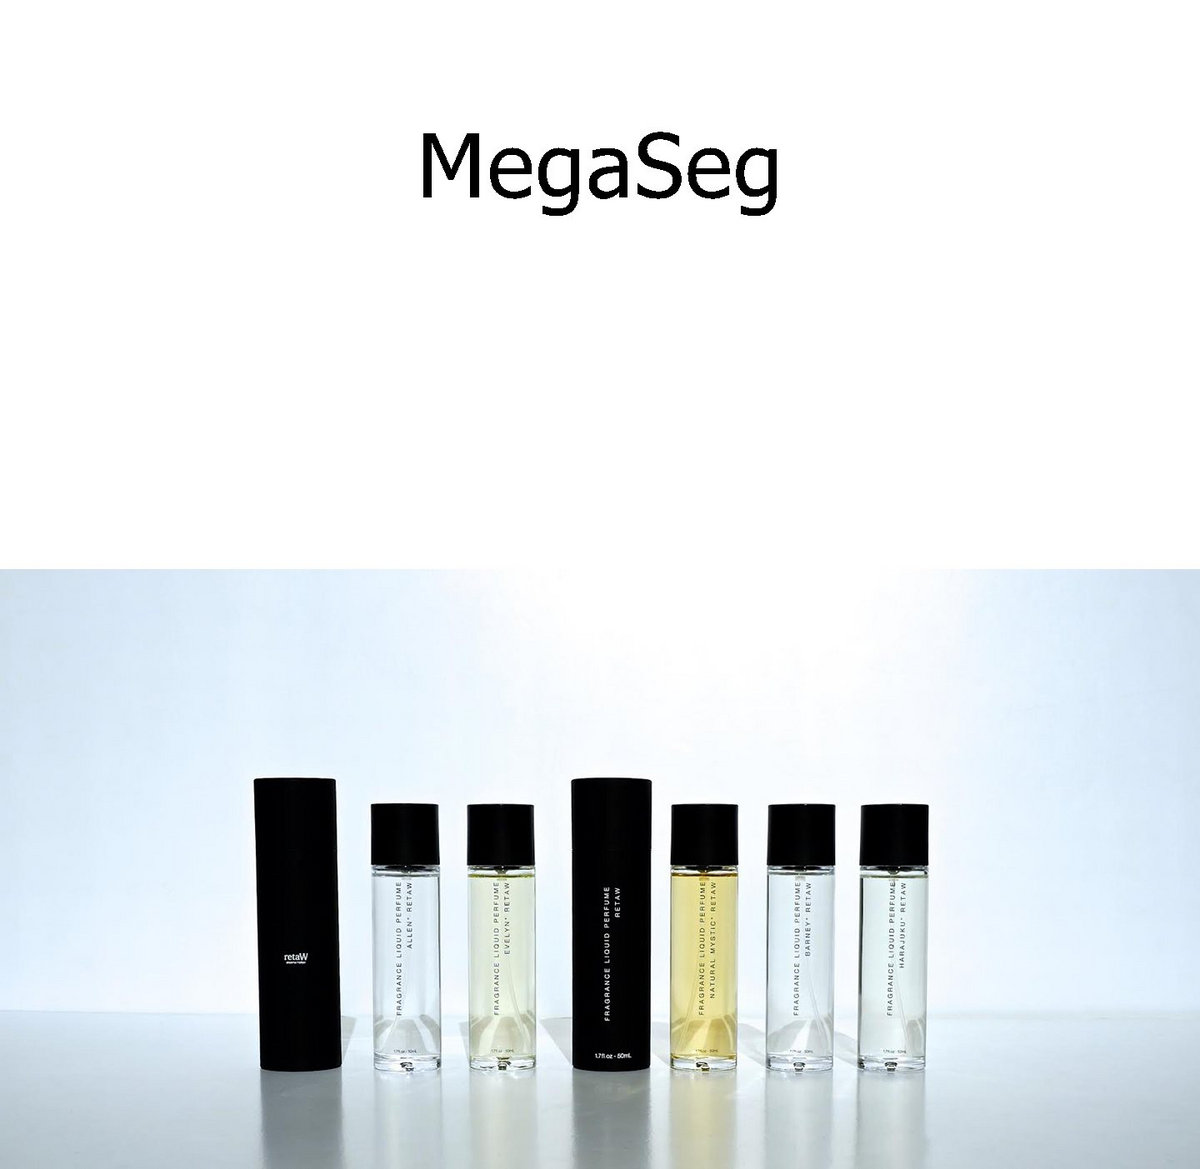 megaseg free download mac